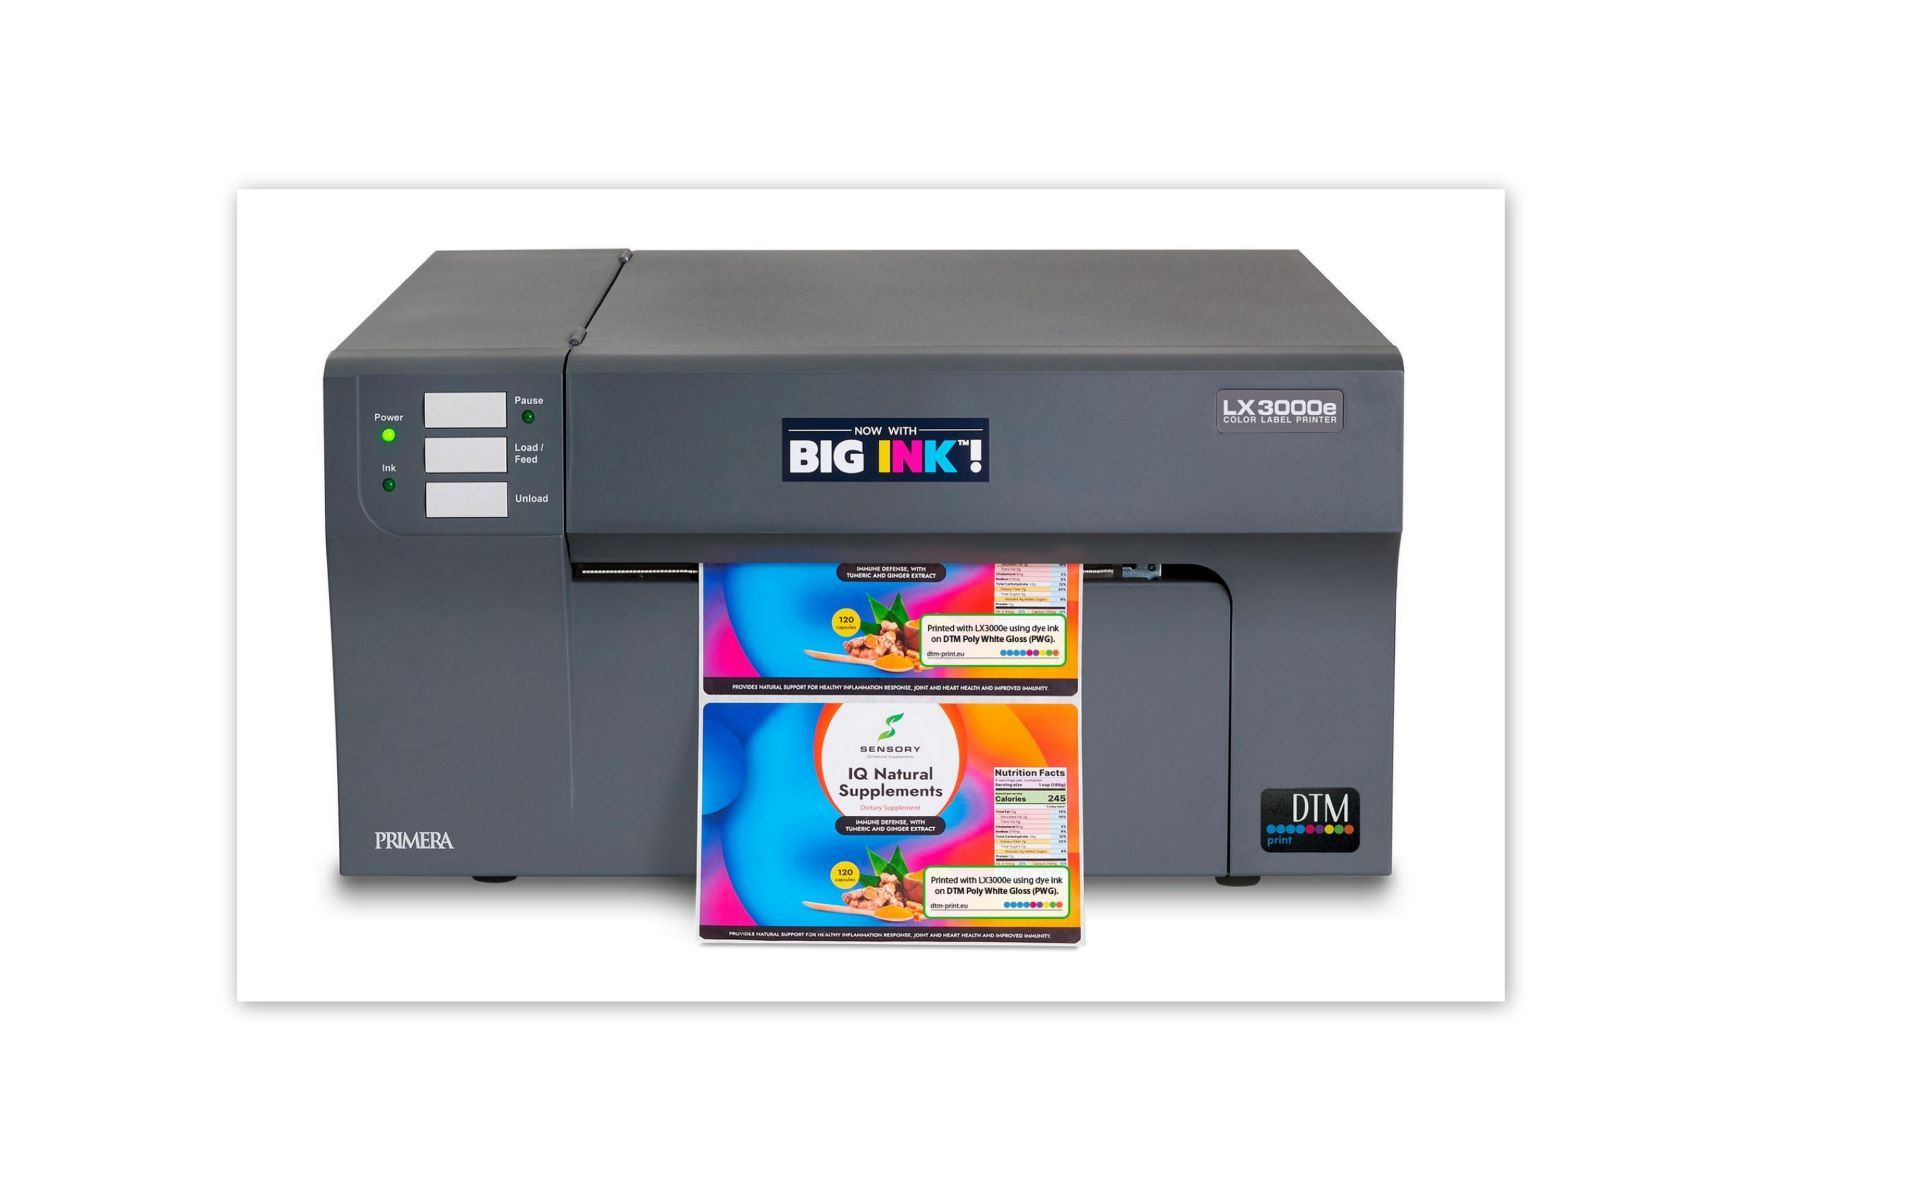 Label Pigment-basierte DTM LX3000e Printer Color mit Vollfarb-Drucktechnologie Netzwerkfähig Label Pigment PRINT drei separaten Tintentanks(CMY) WLAN Inkjet Printer